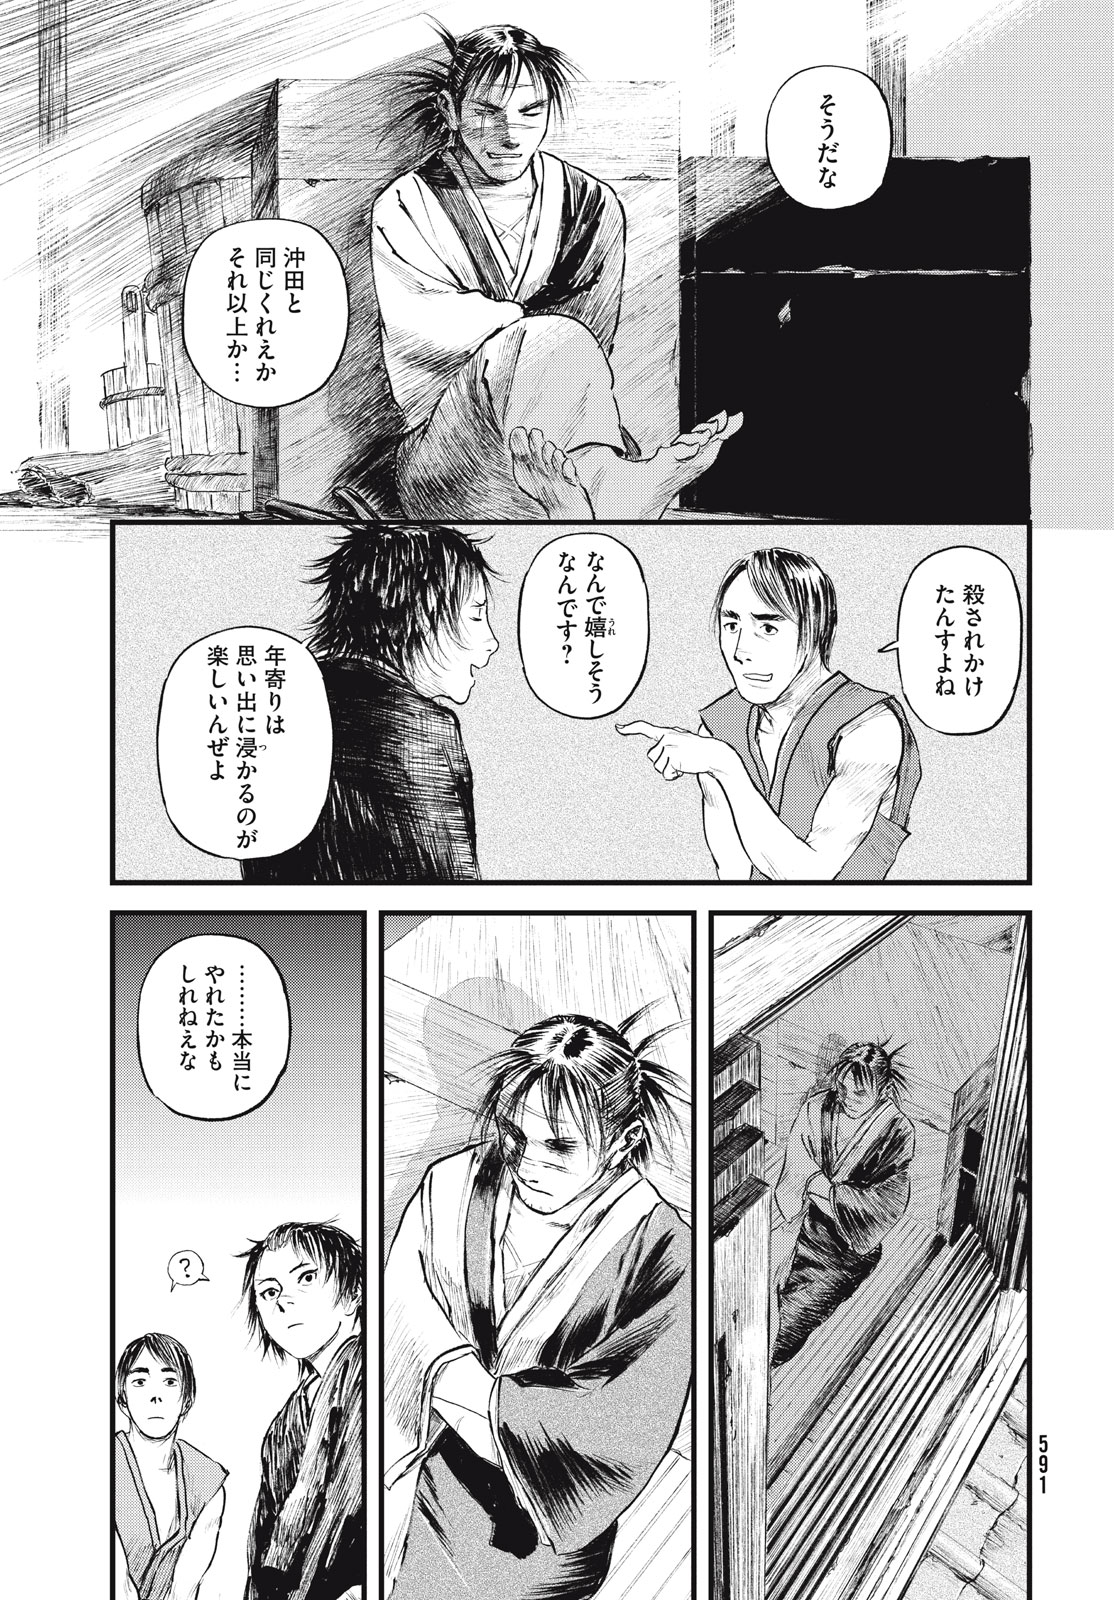 Blade of the Immortal: Bakumatsu Arc - Chapter 51 - Page 31